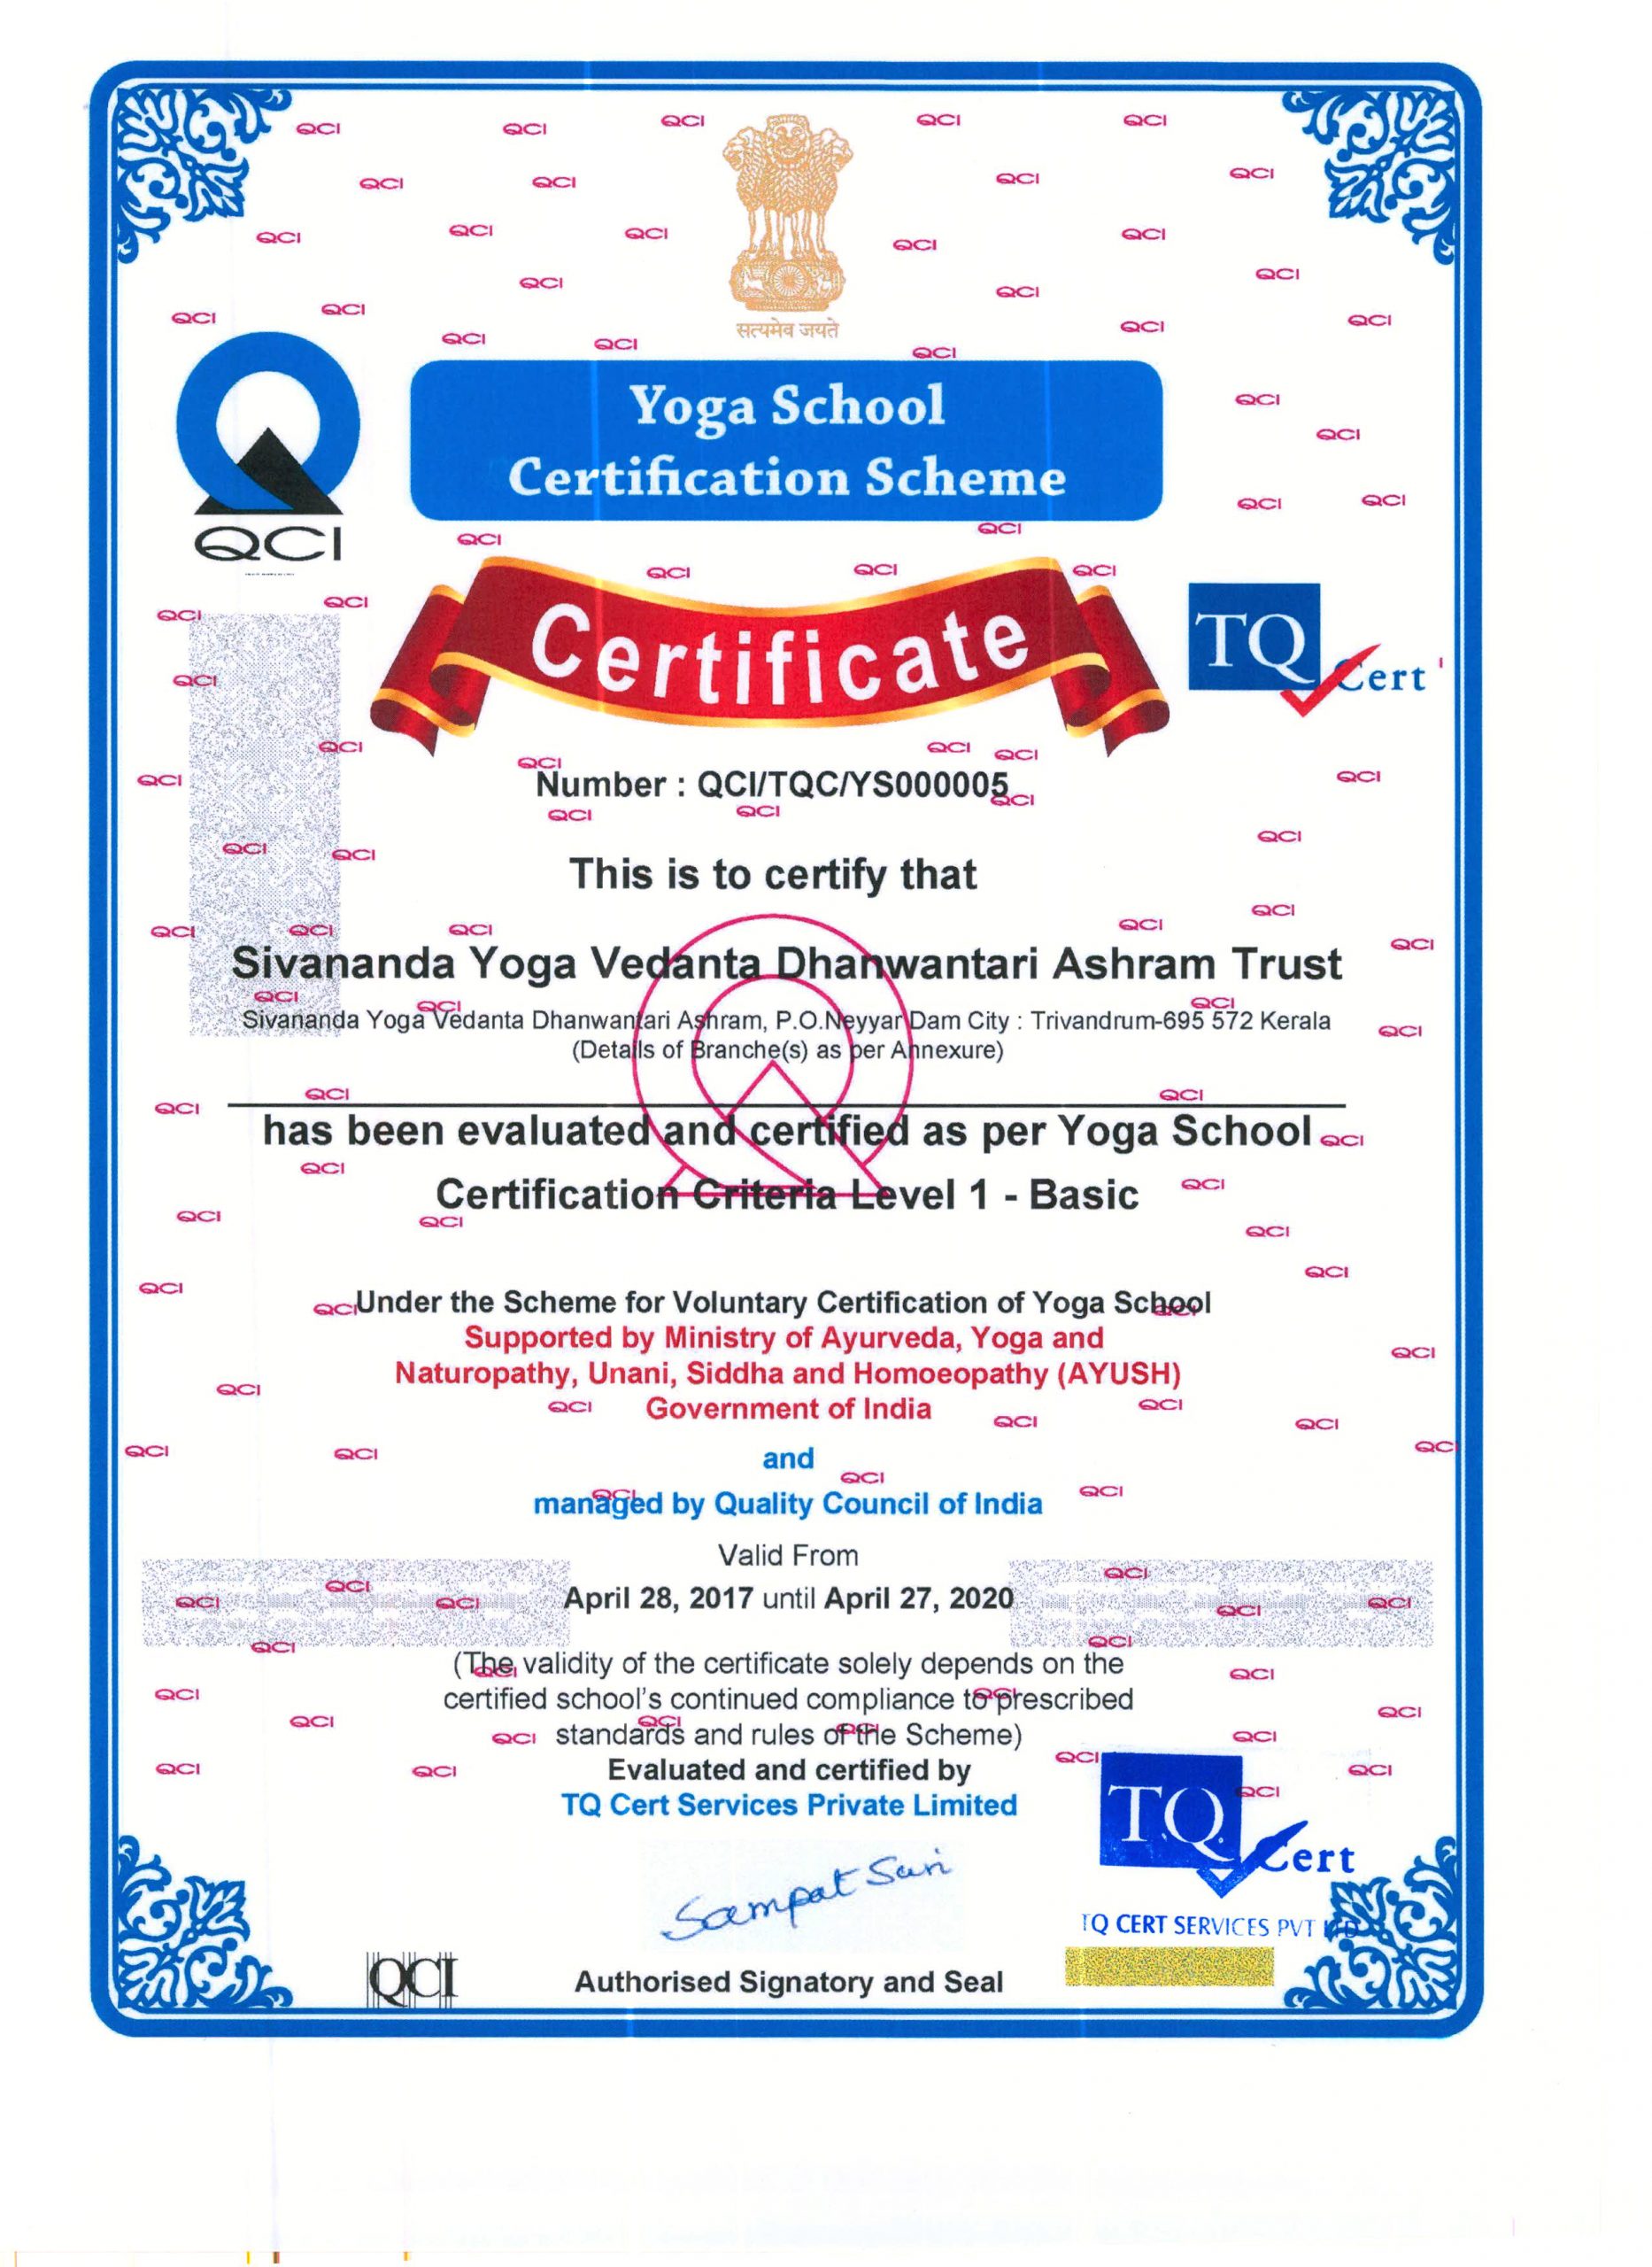 sivananda-gudur-ttc-upgrade-programme-qci-certificate